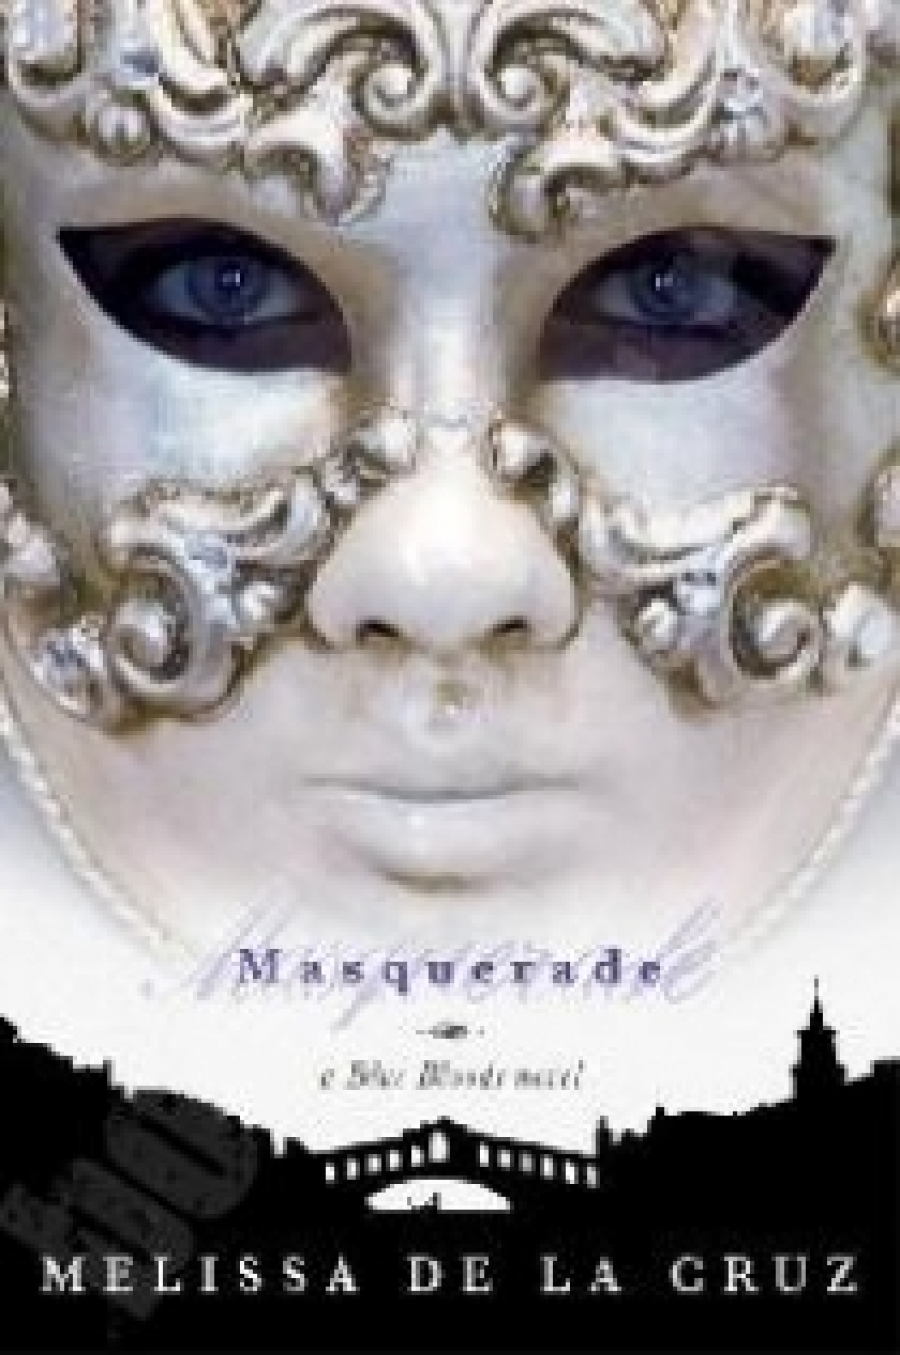 Melissa D.L.C. Blue Bloods v.2: Masquerade 